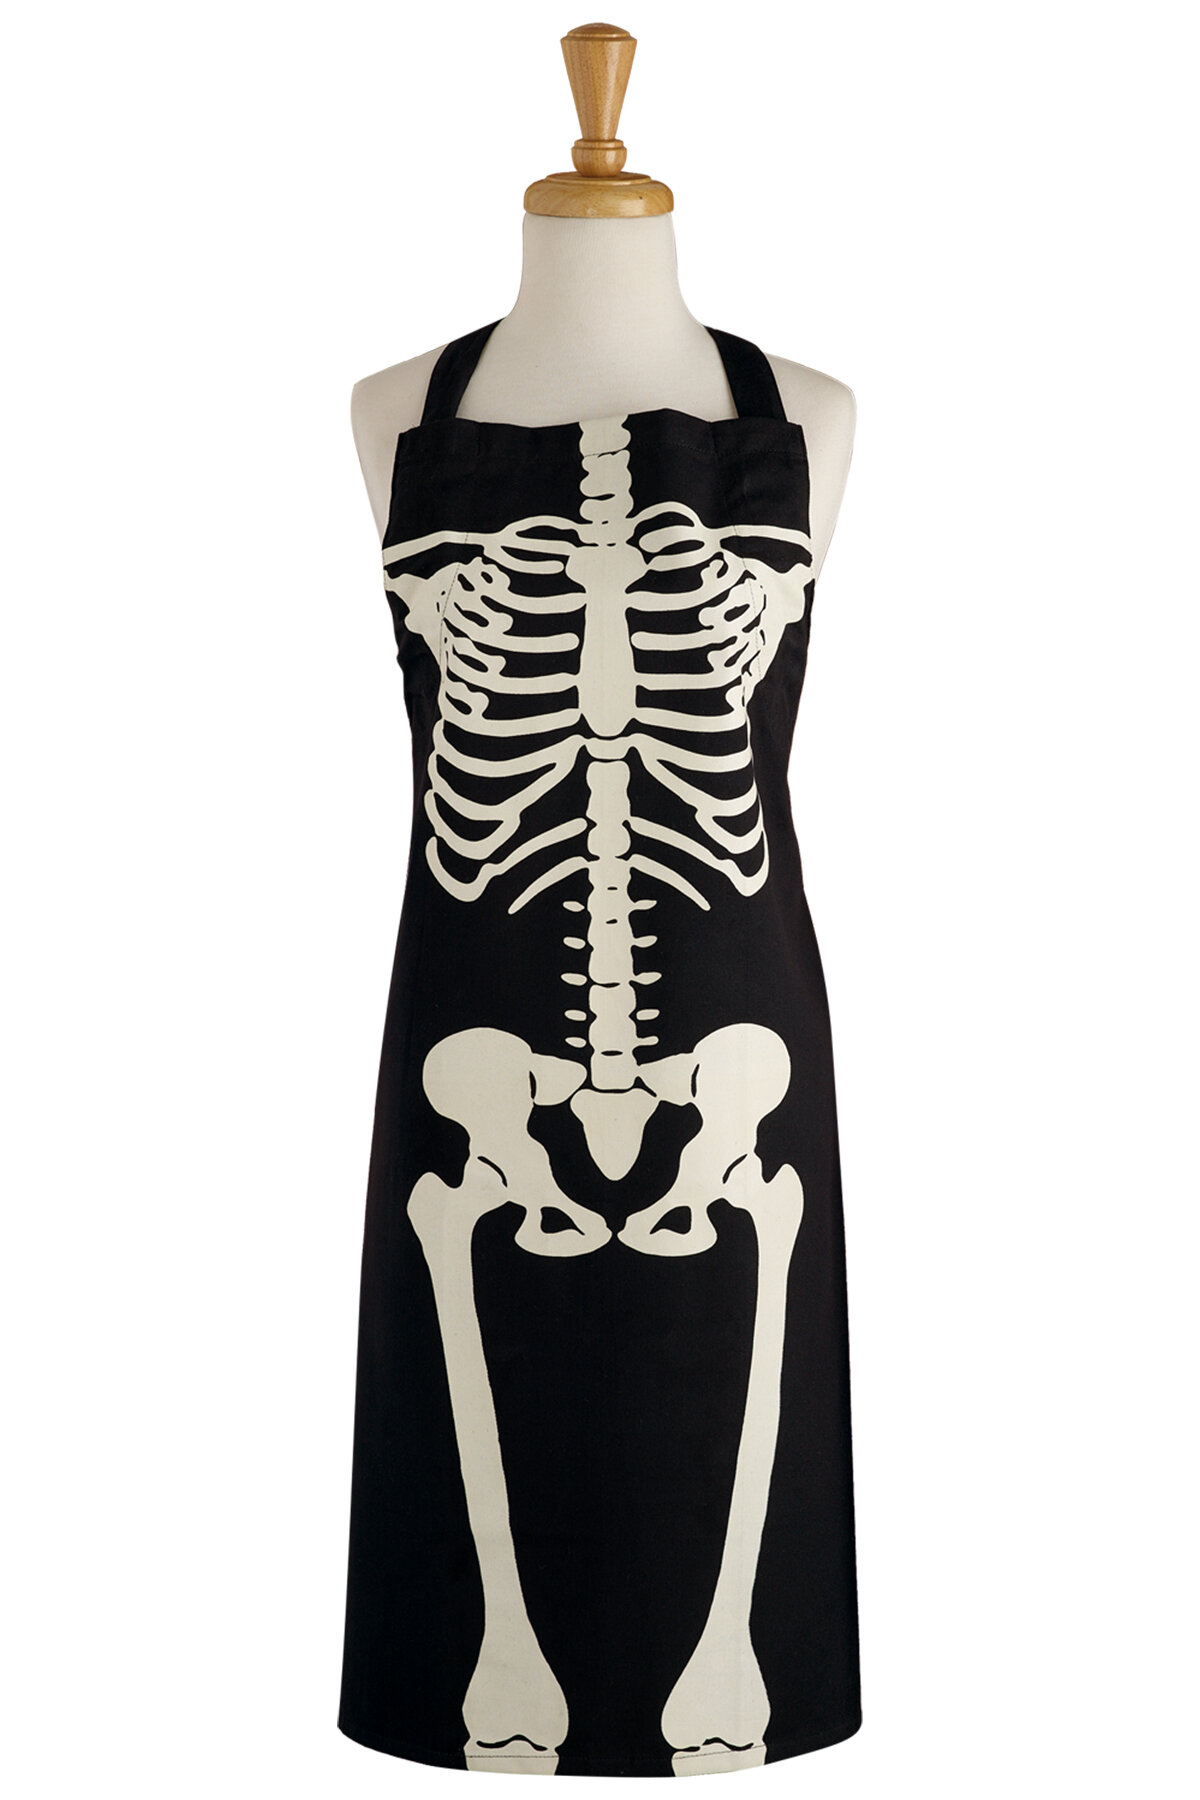 The Holiday Aisle® Skeleton Printed Chef's Apron | Wayfair